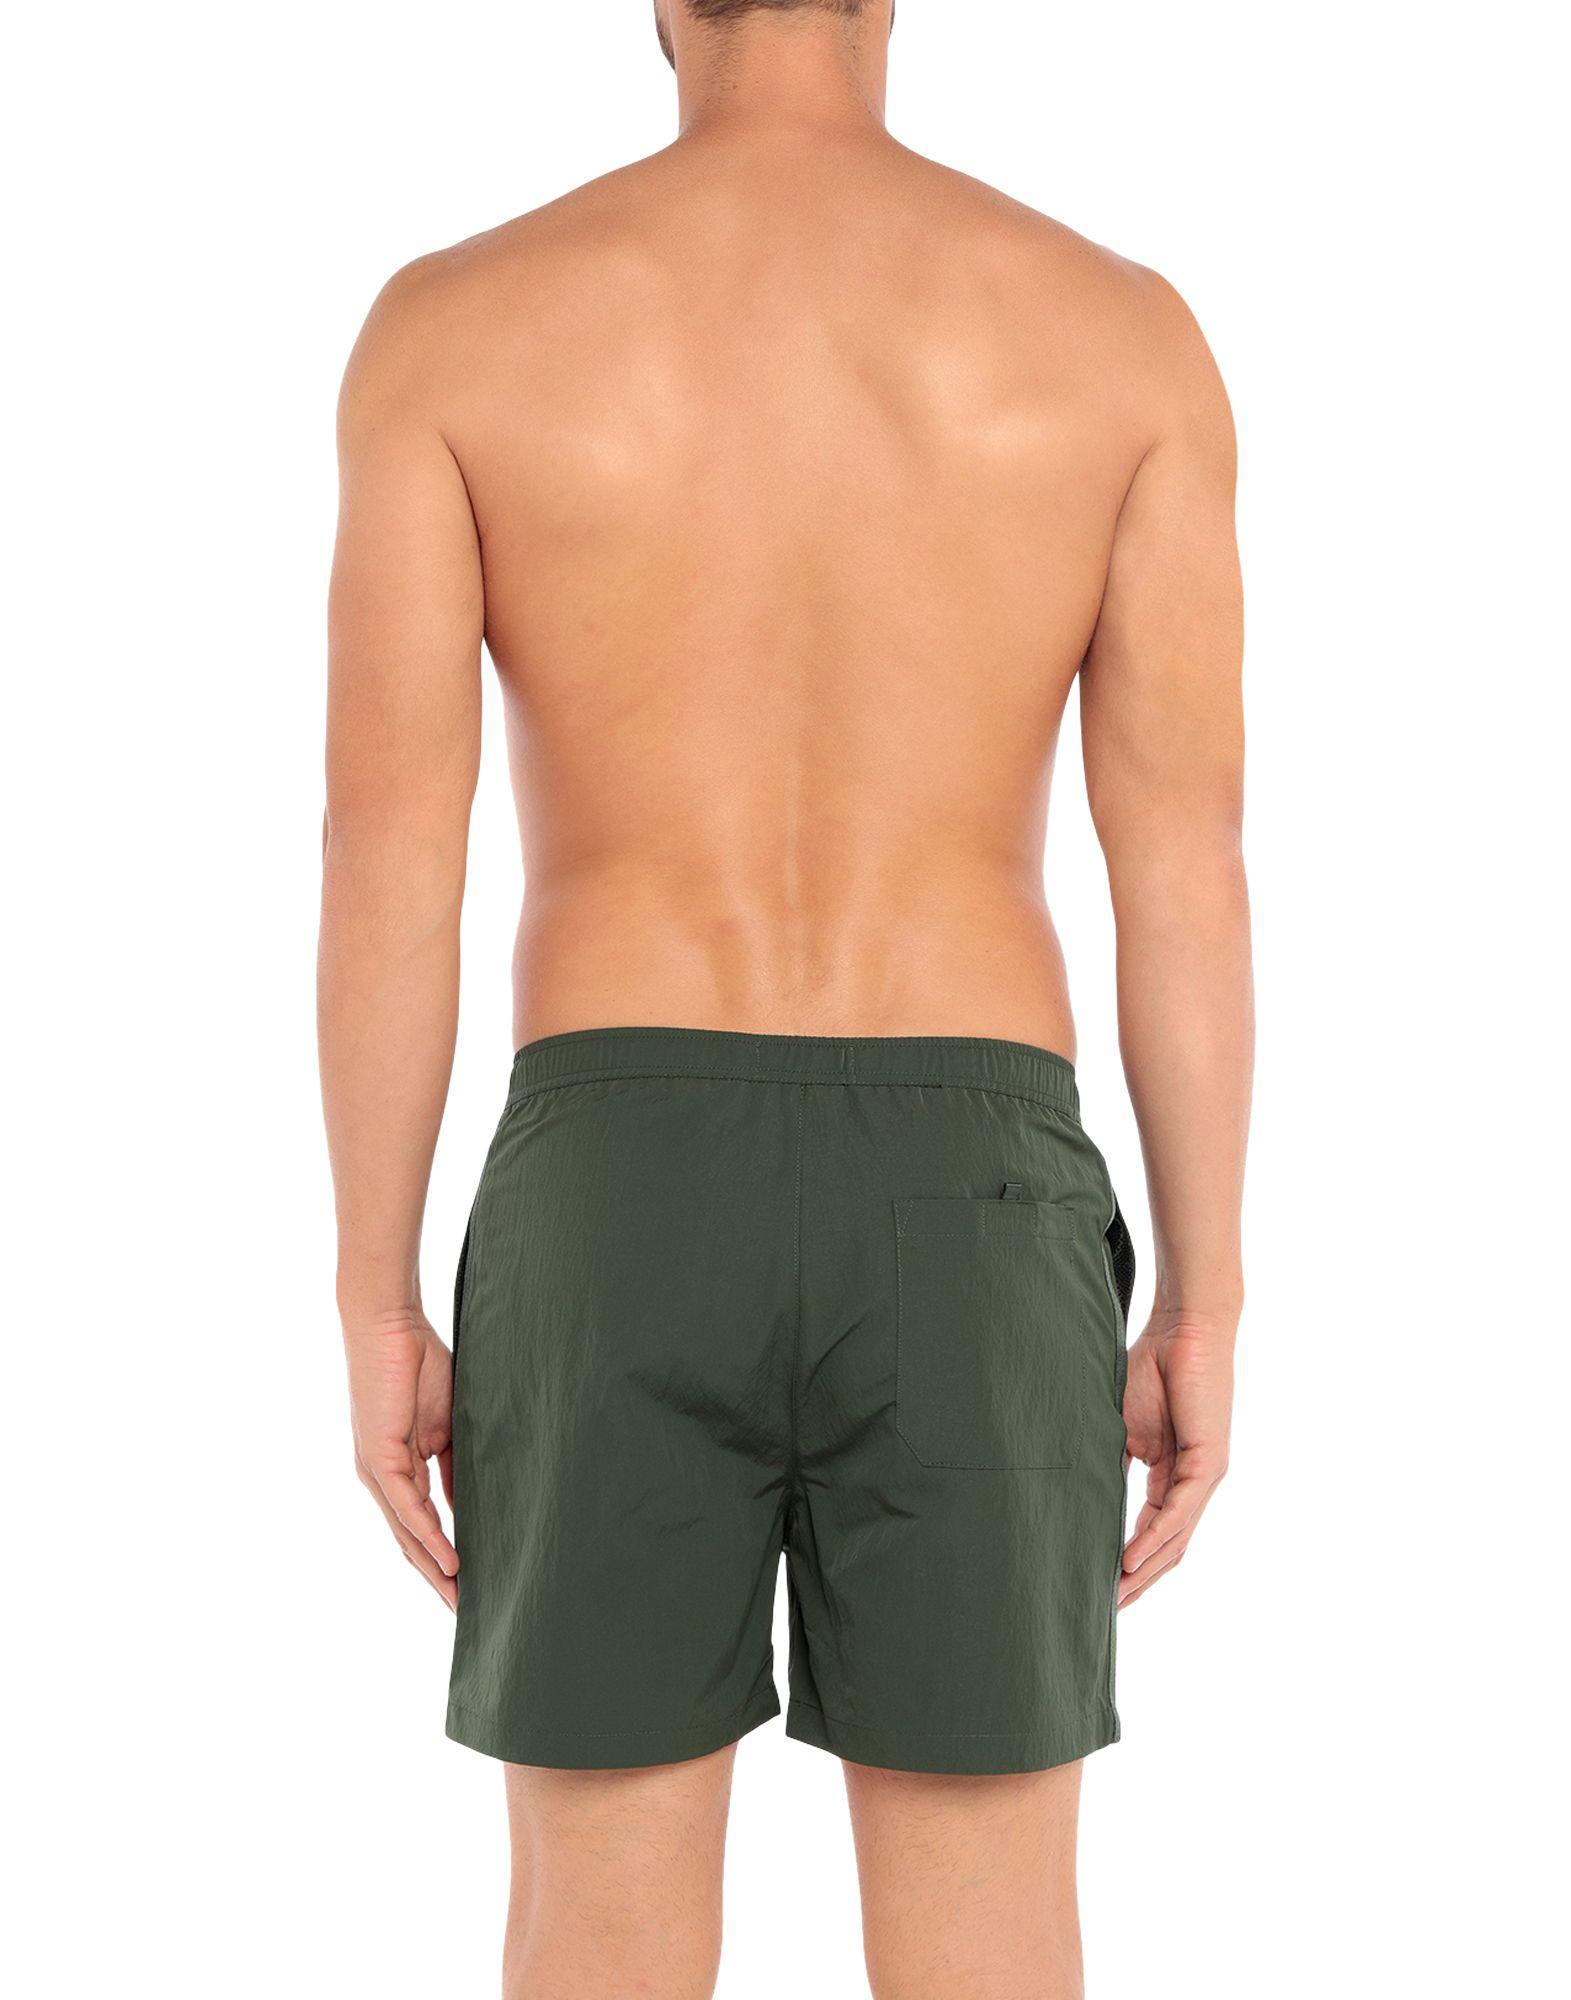 Minimum Synthetic Swim Trunks in Green for Men - Lyst